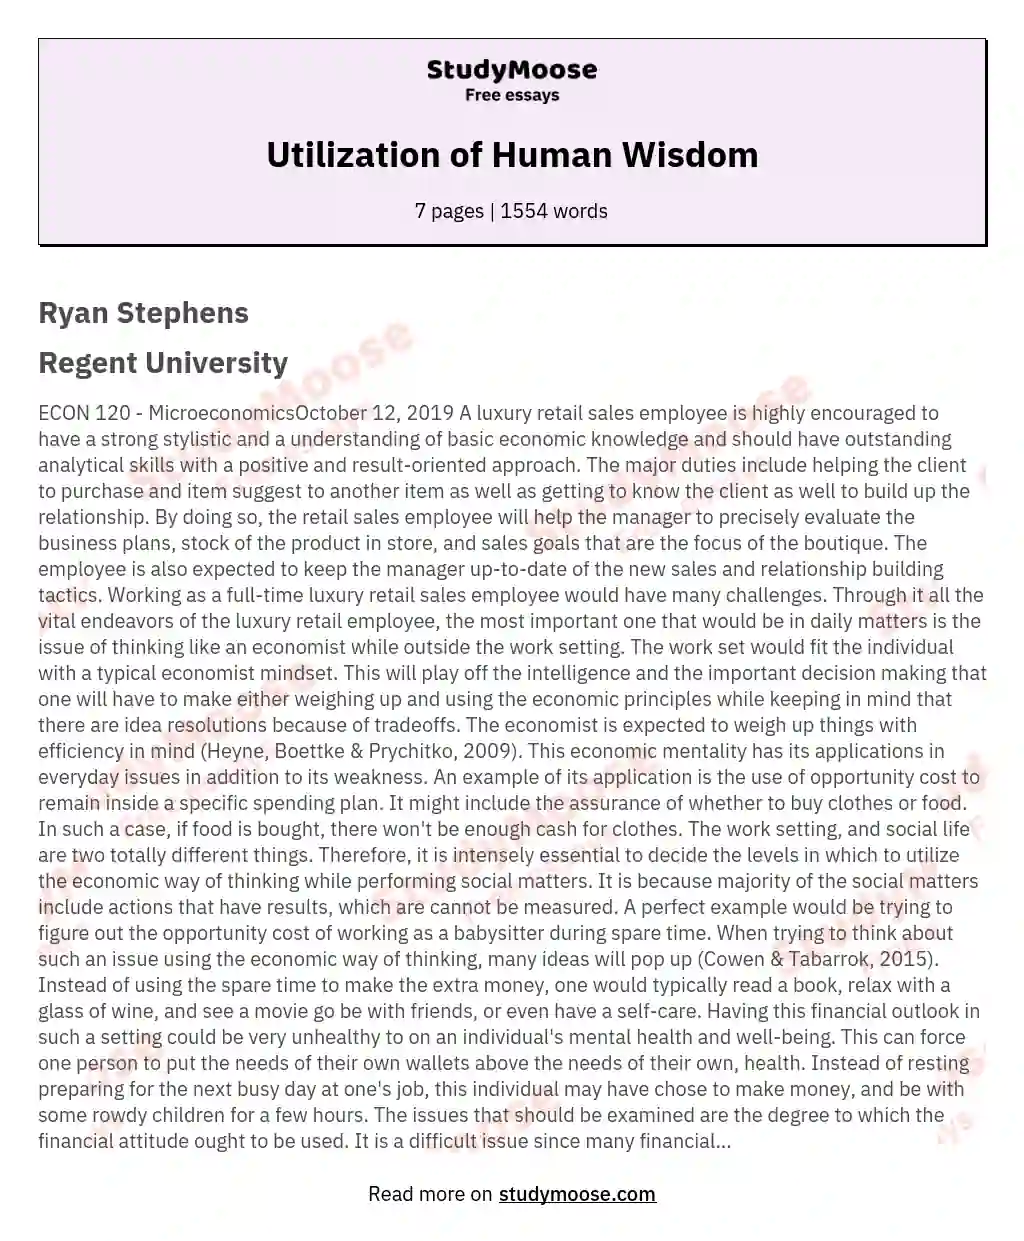 Utilization of Human Wisdom essay